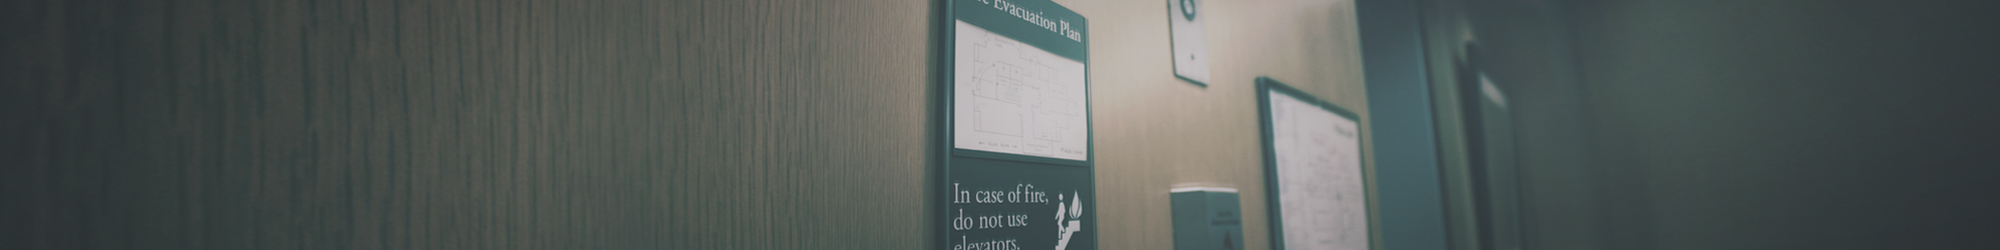 Evacuation plan sign